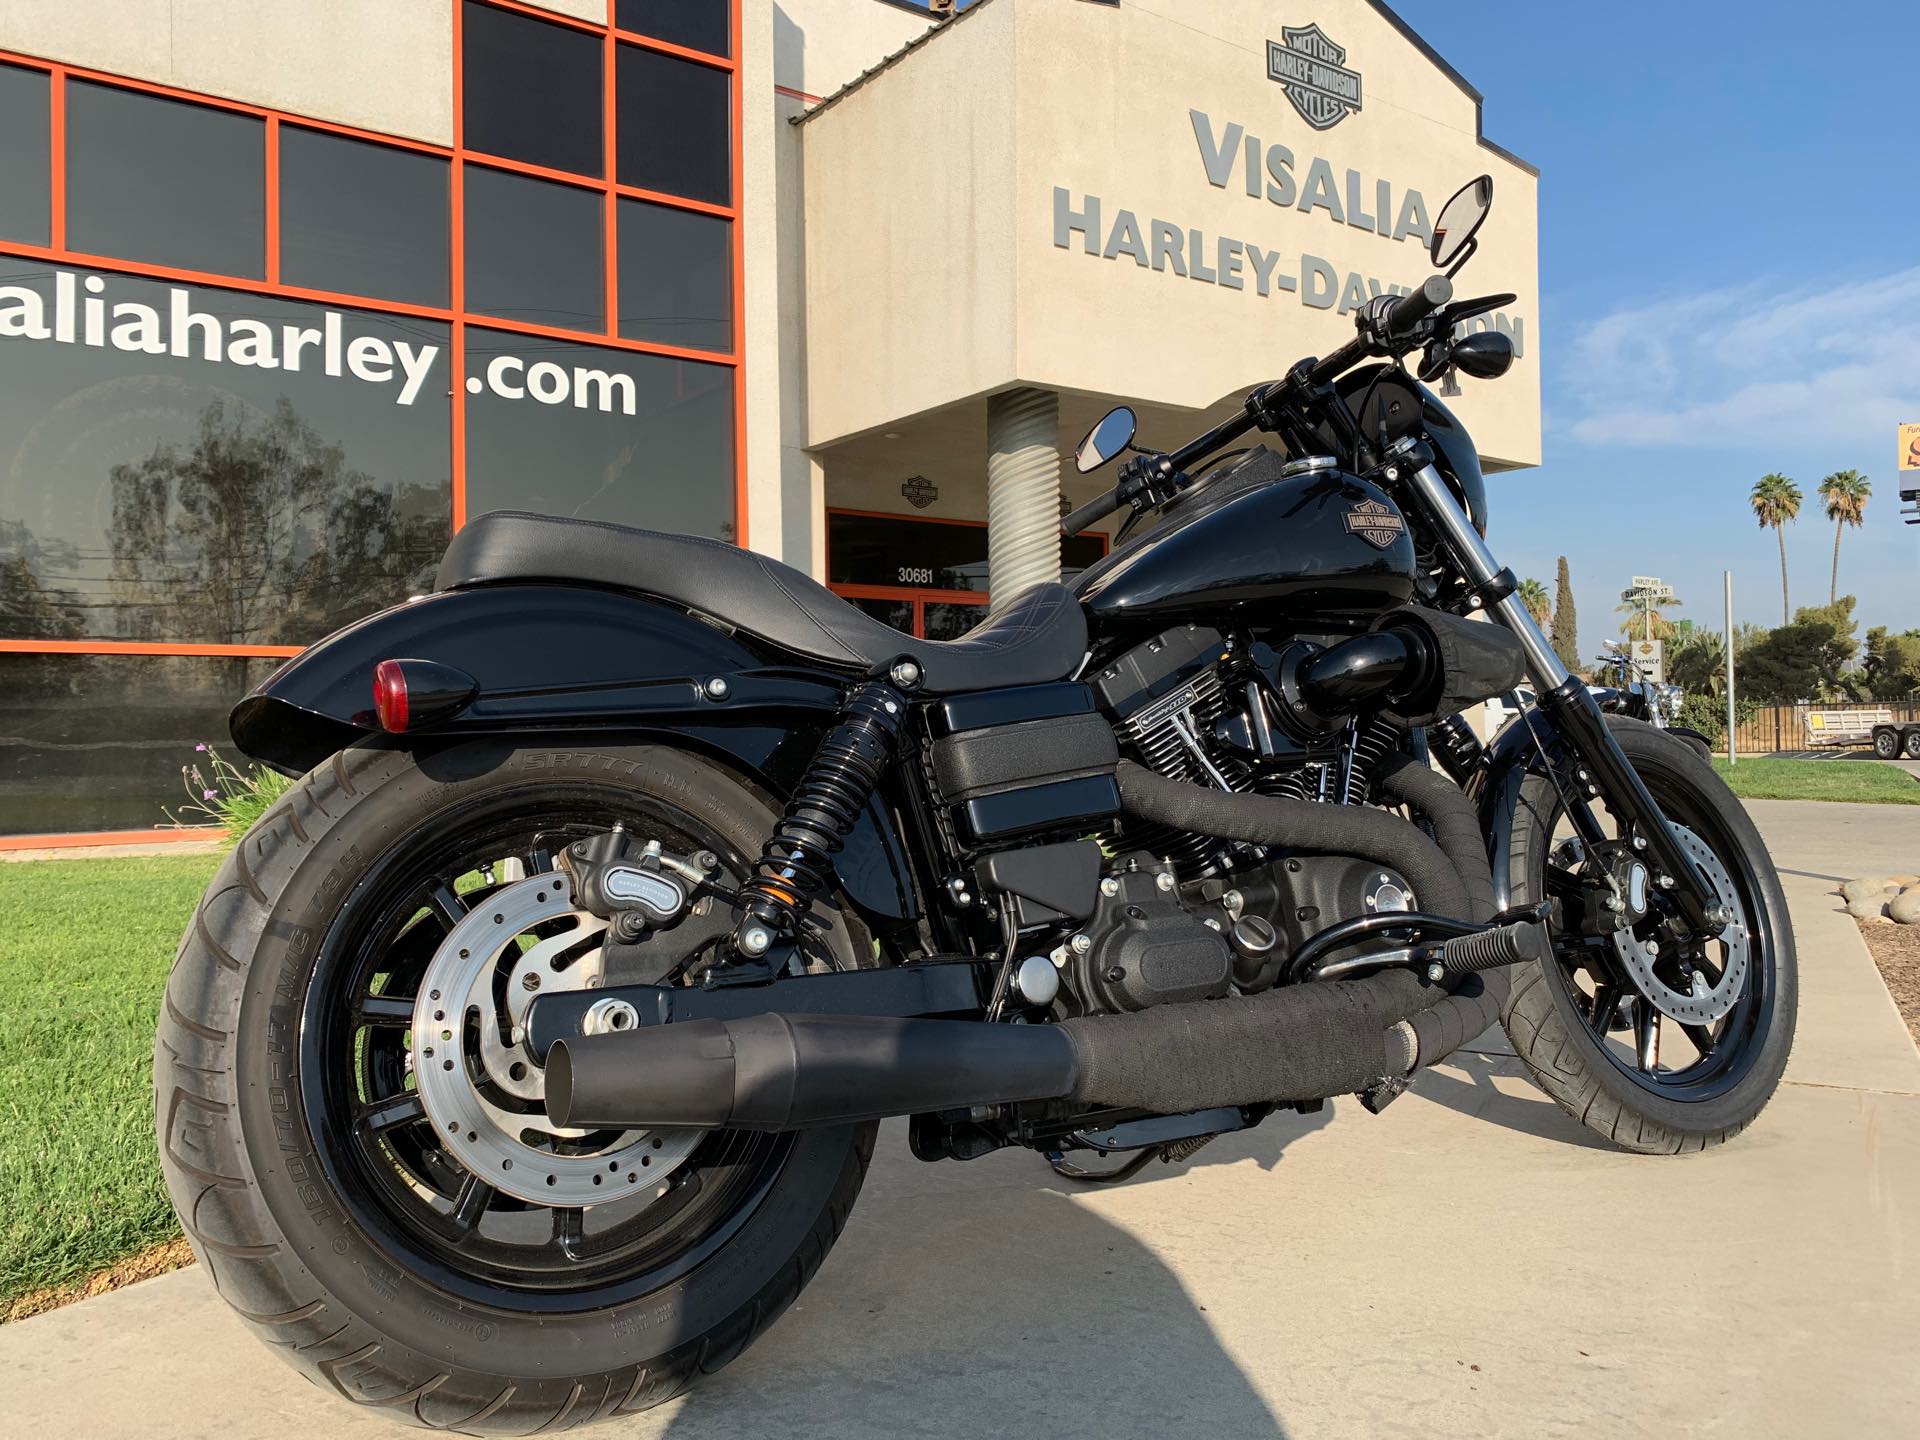 2016 Harley-Davidson S-Series Low Rider at Visalia Harley-Davidson